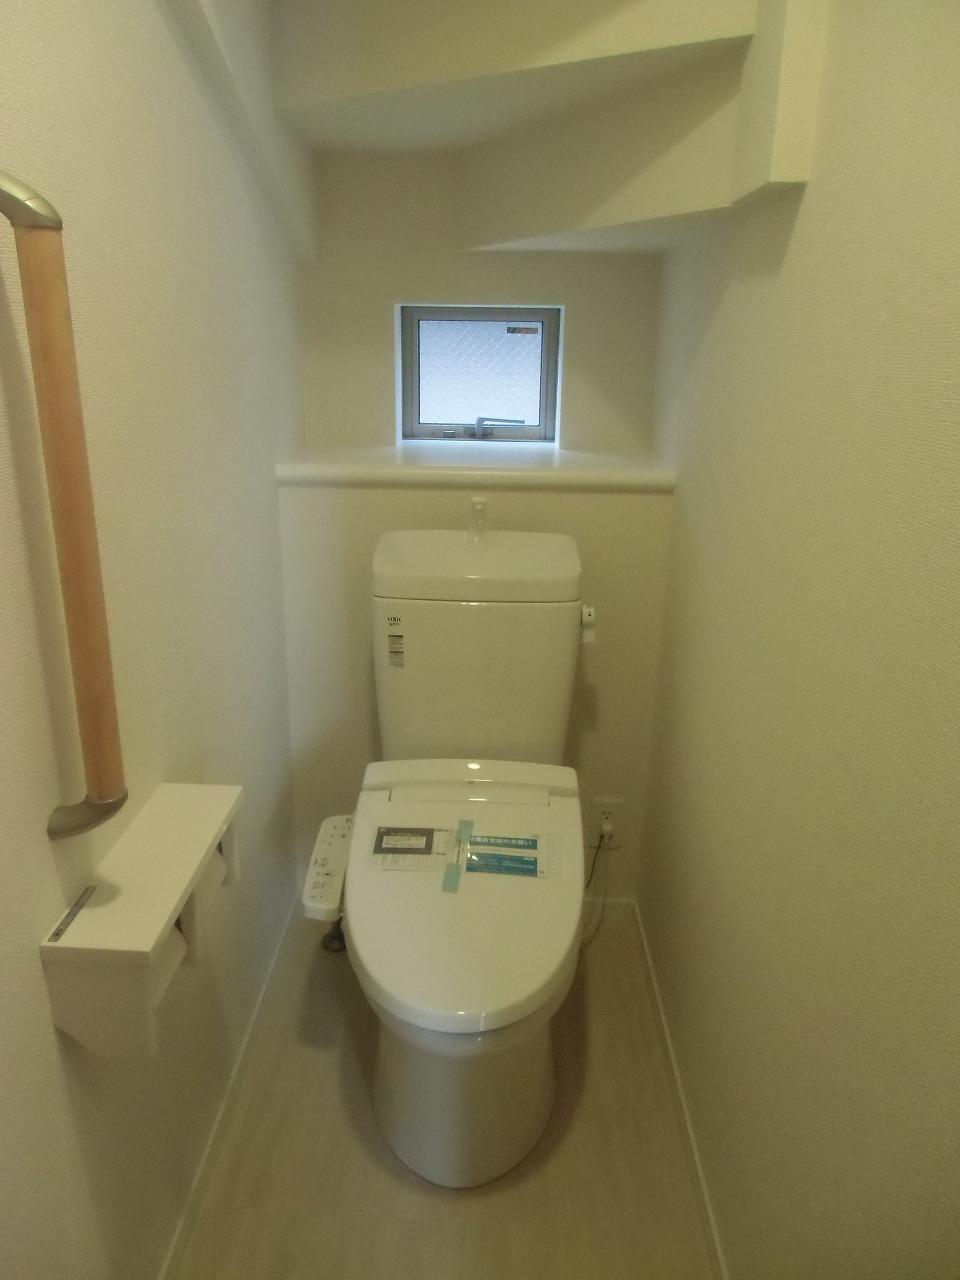 Toilet. 2013.11.1 shooting